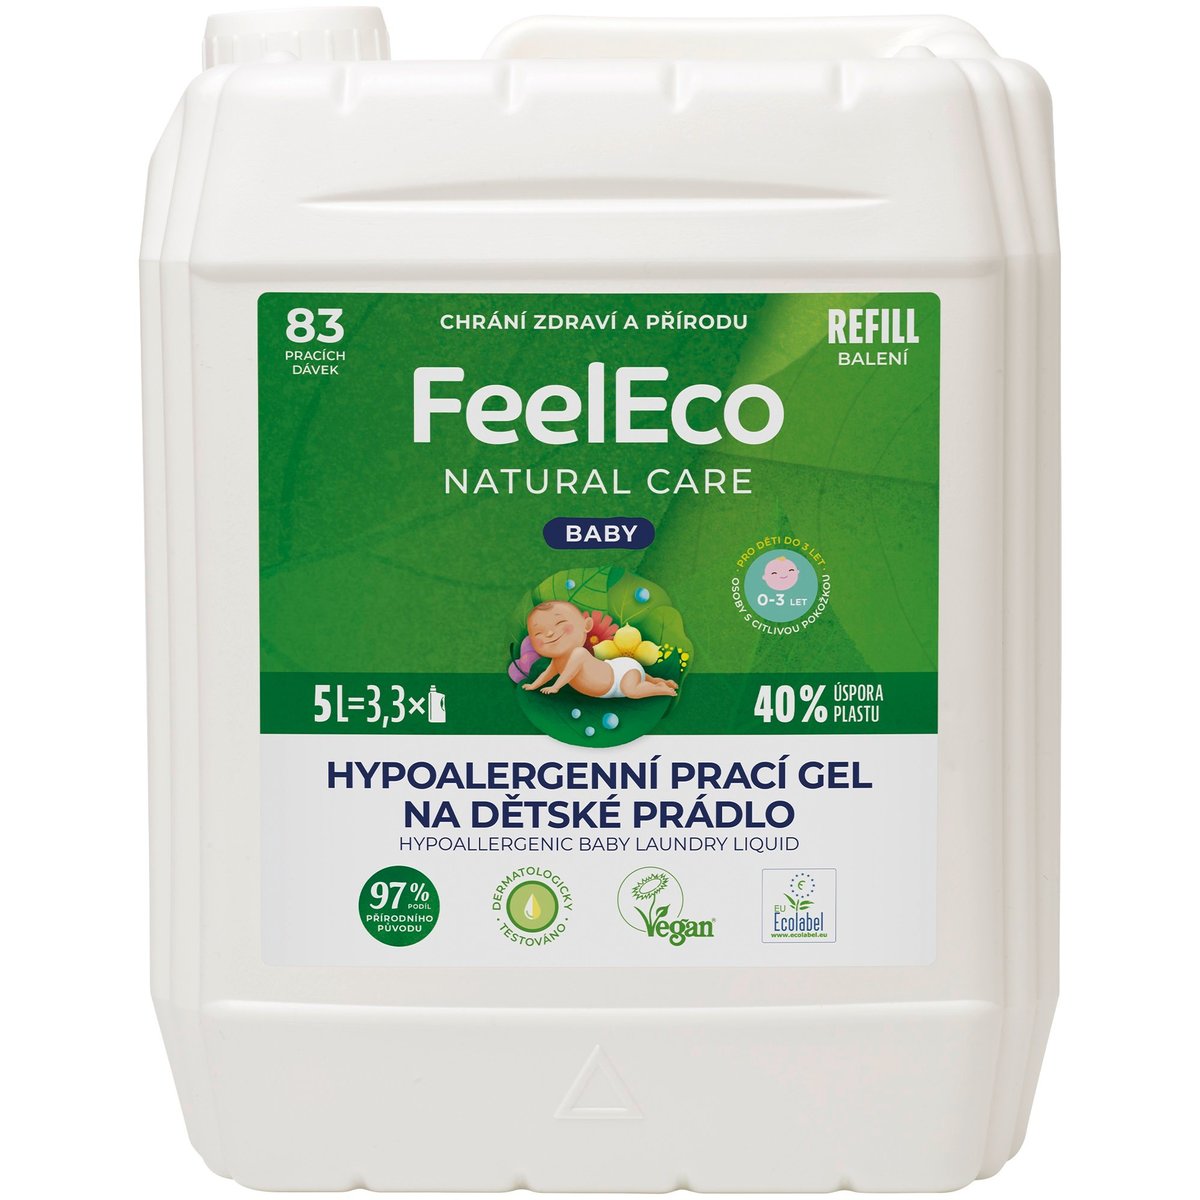 Feel Eco Prací gel baby (5 l)